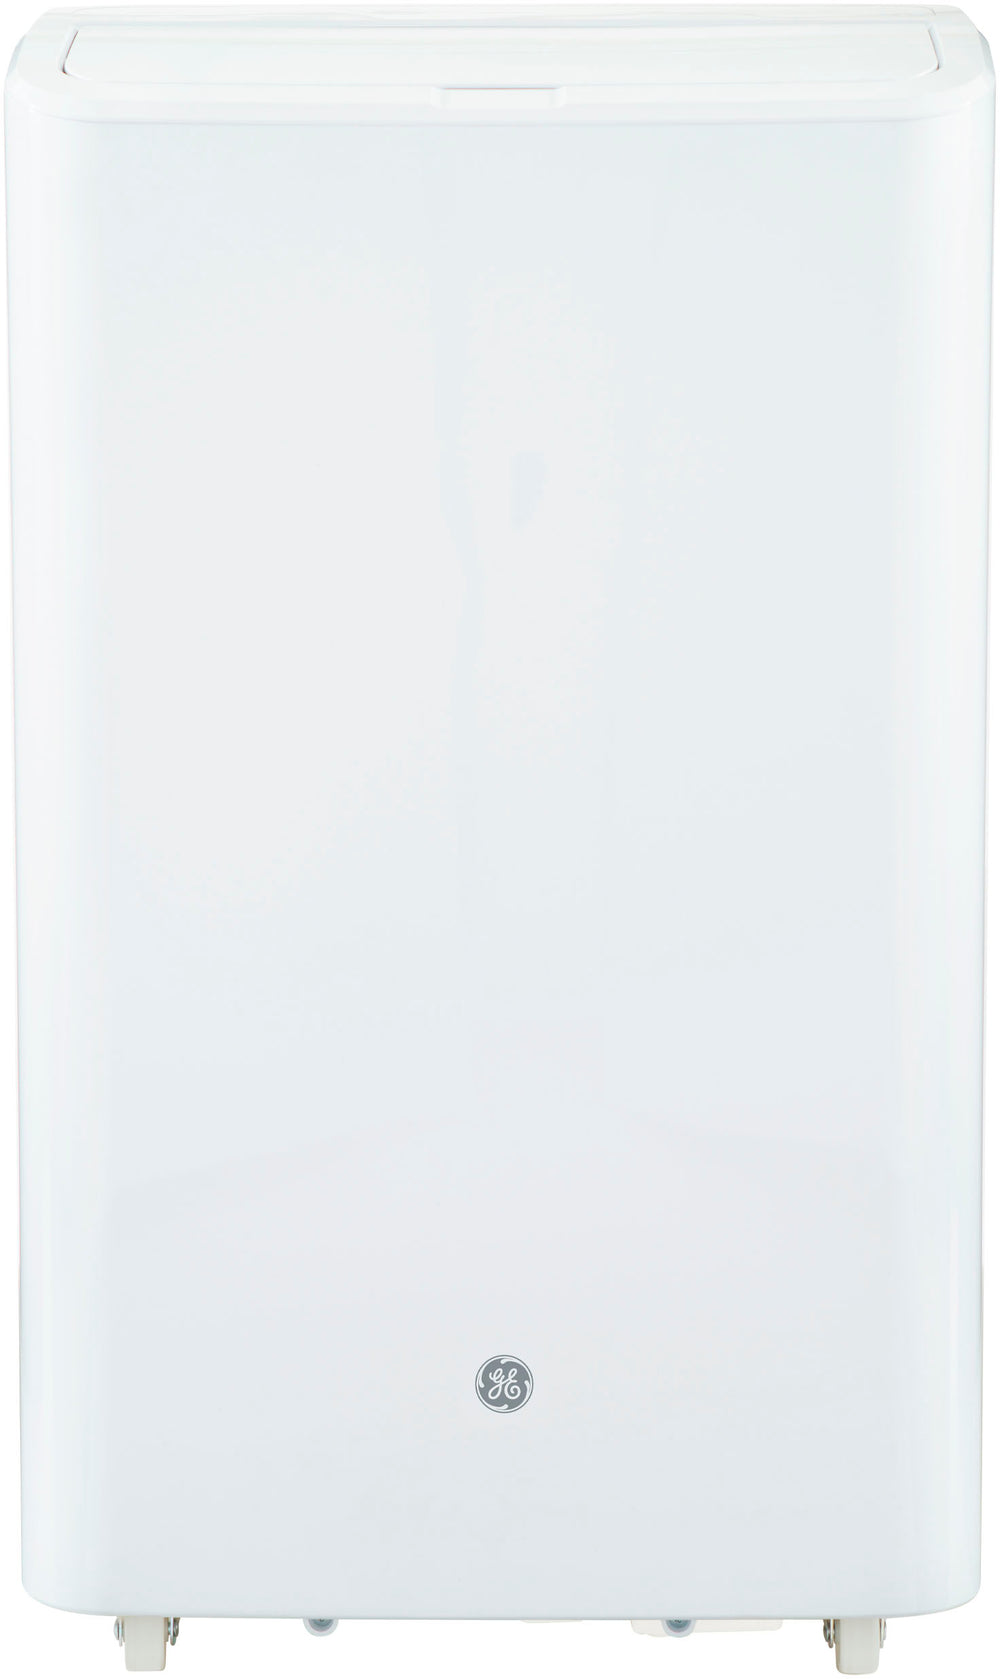 GE - 300 Sq. Ft. 7550 BTU Smart Portable Air Conditioner 10 - White_1